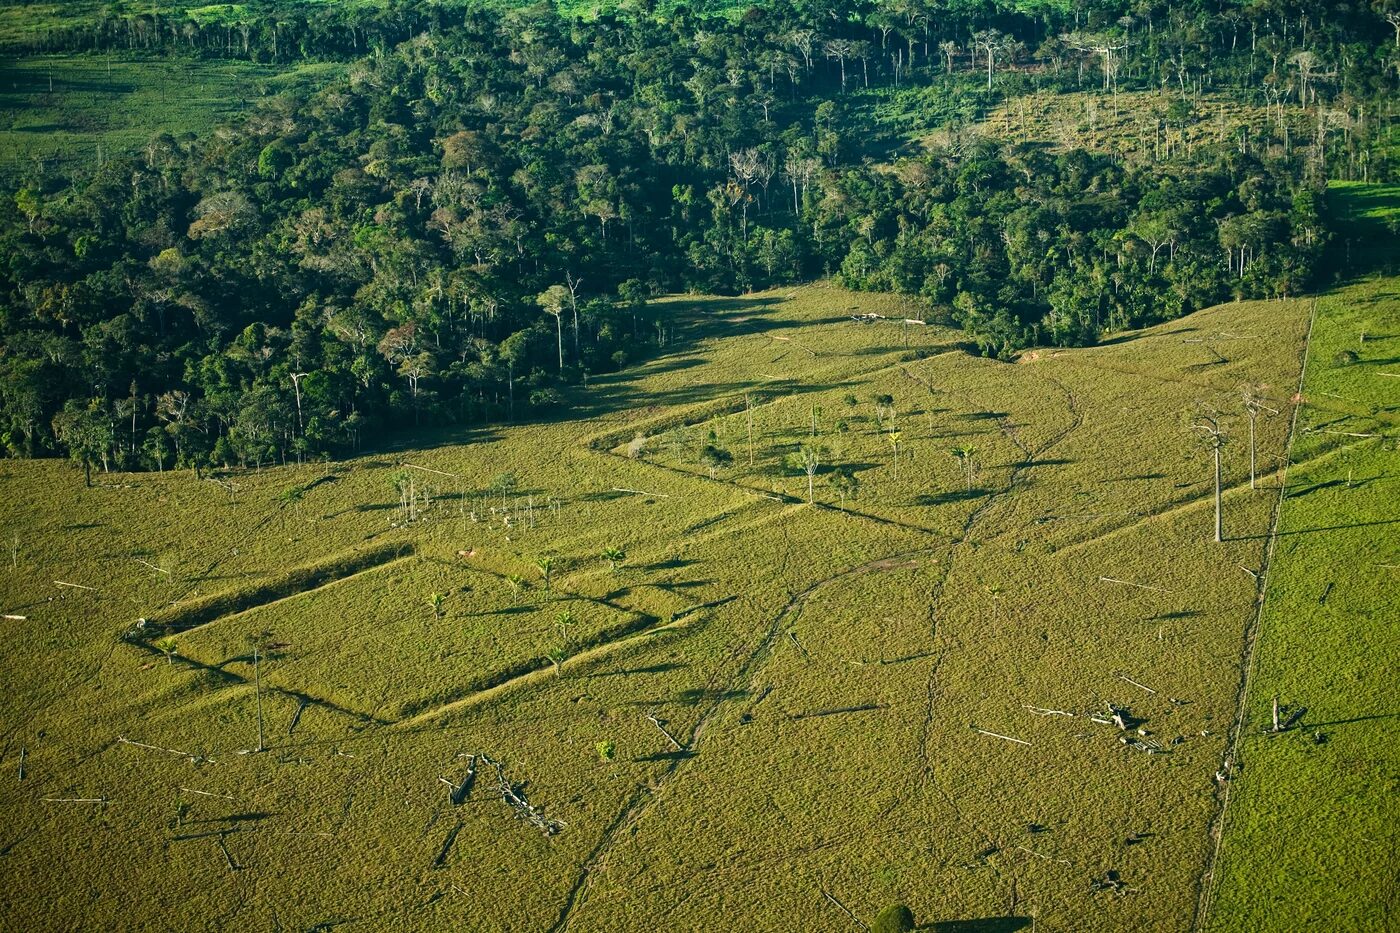 Earthworks on Amazonian landscape